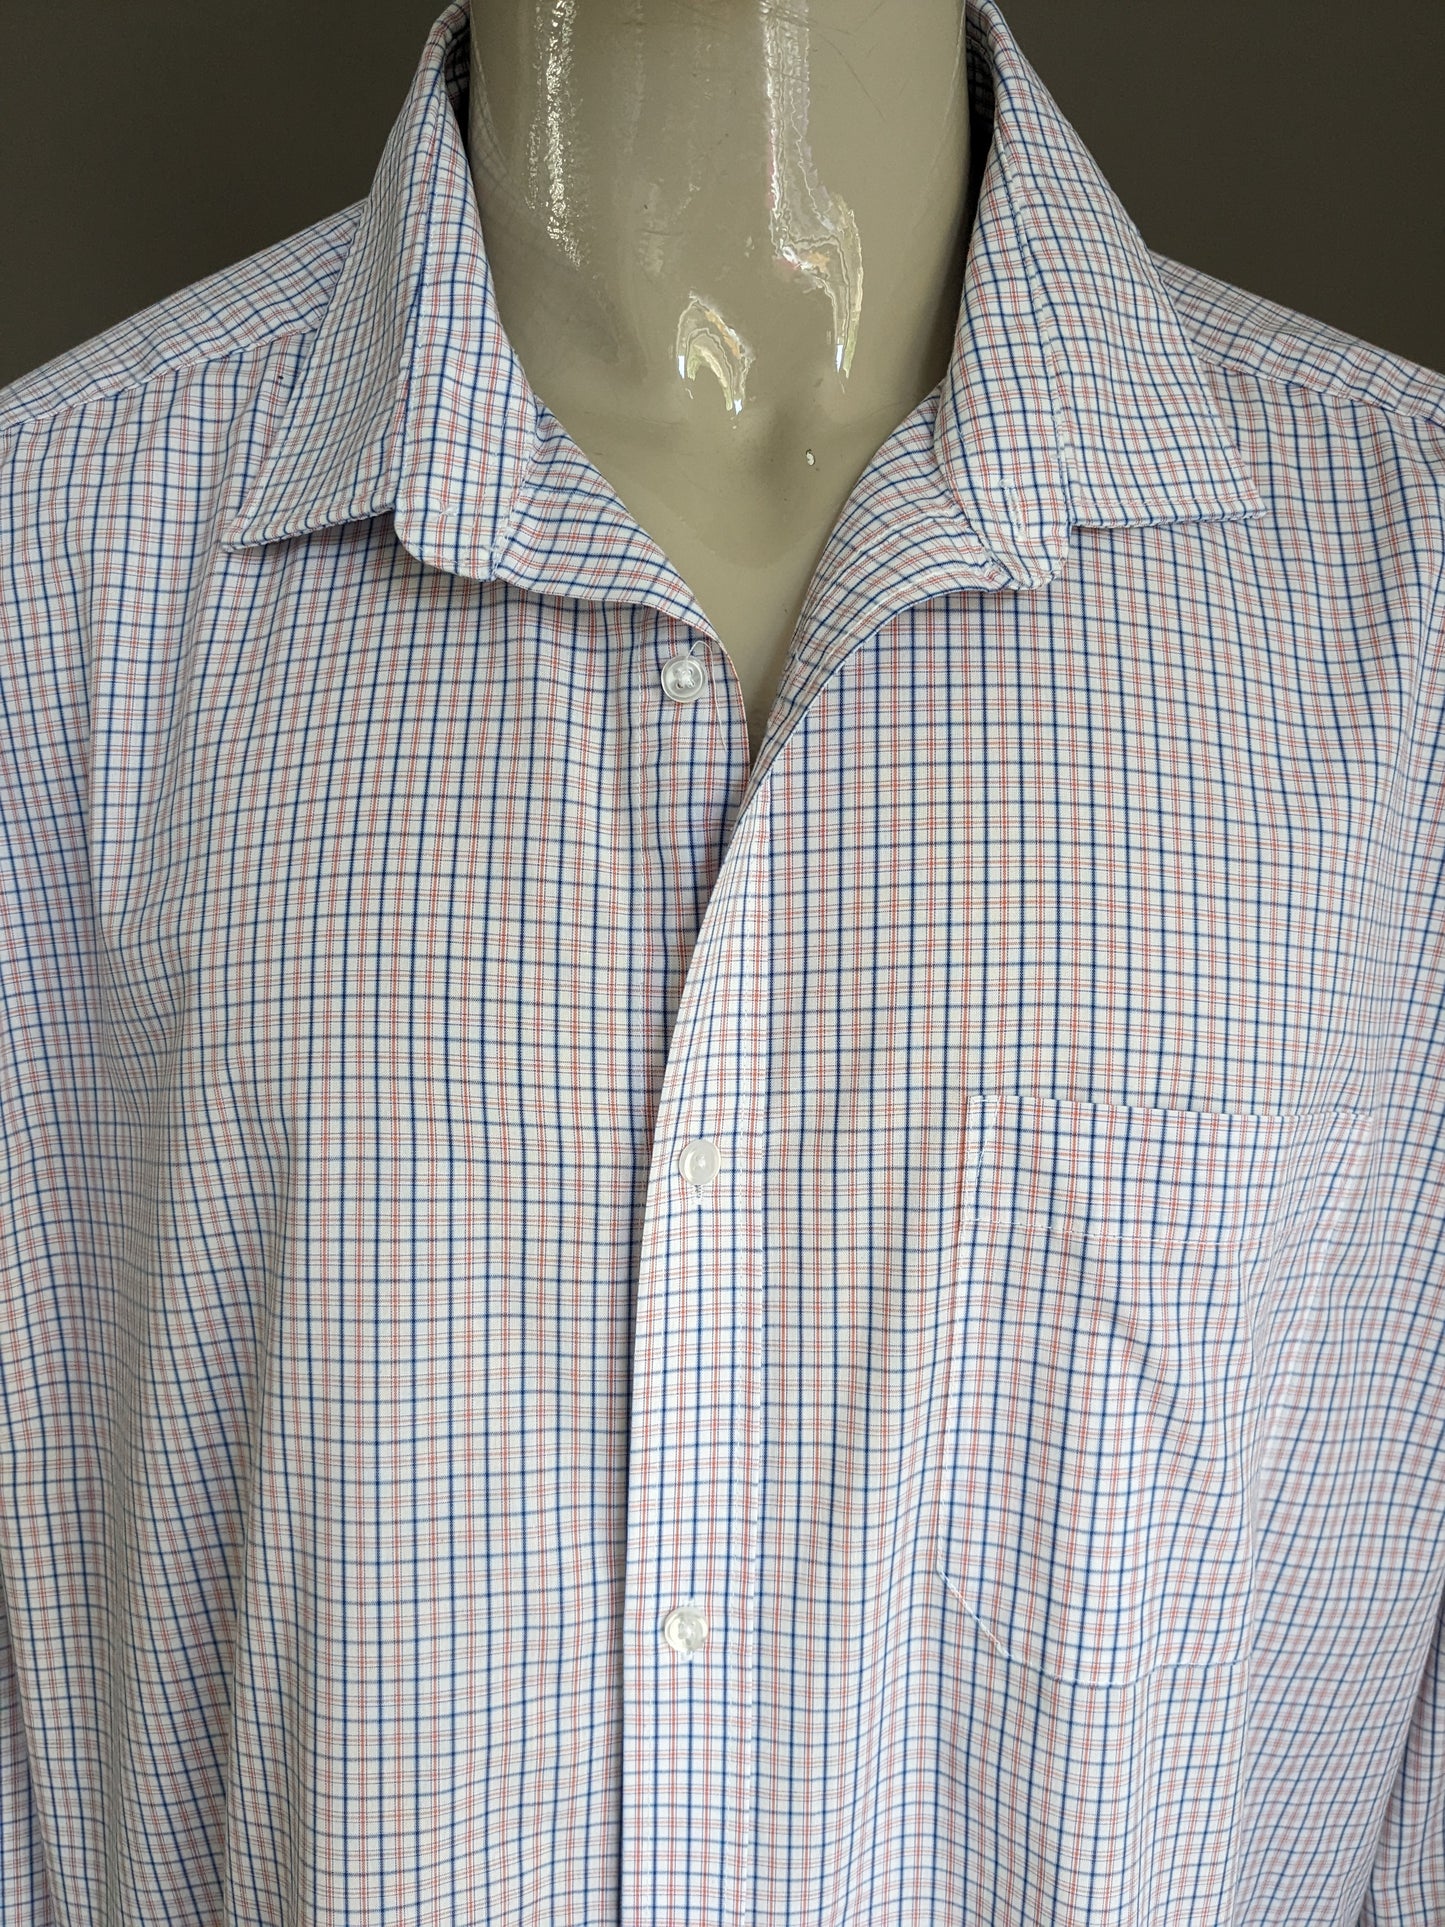 Debenhams Collection overhemd. Rood Blauw Wit geruit. Maat 4XL / XXXXL. Classic Fit.